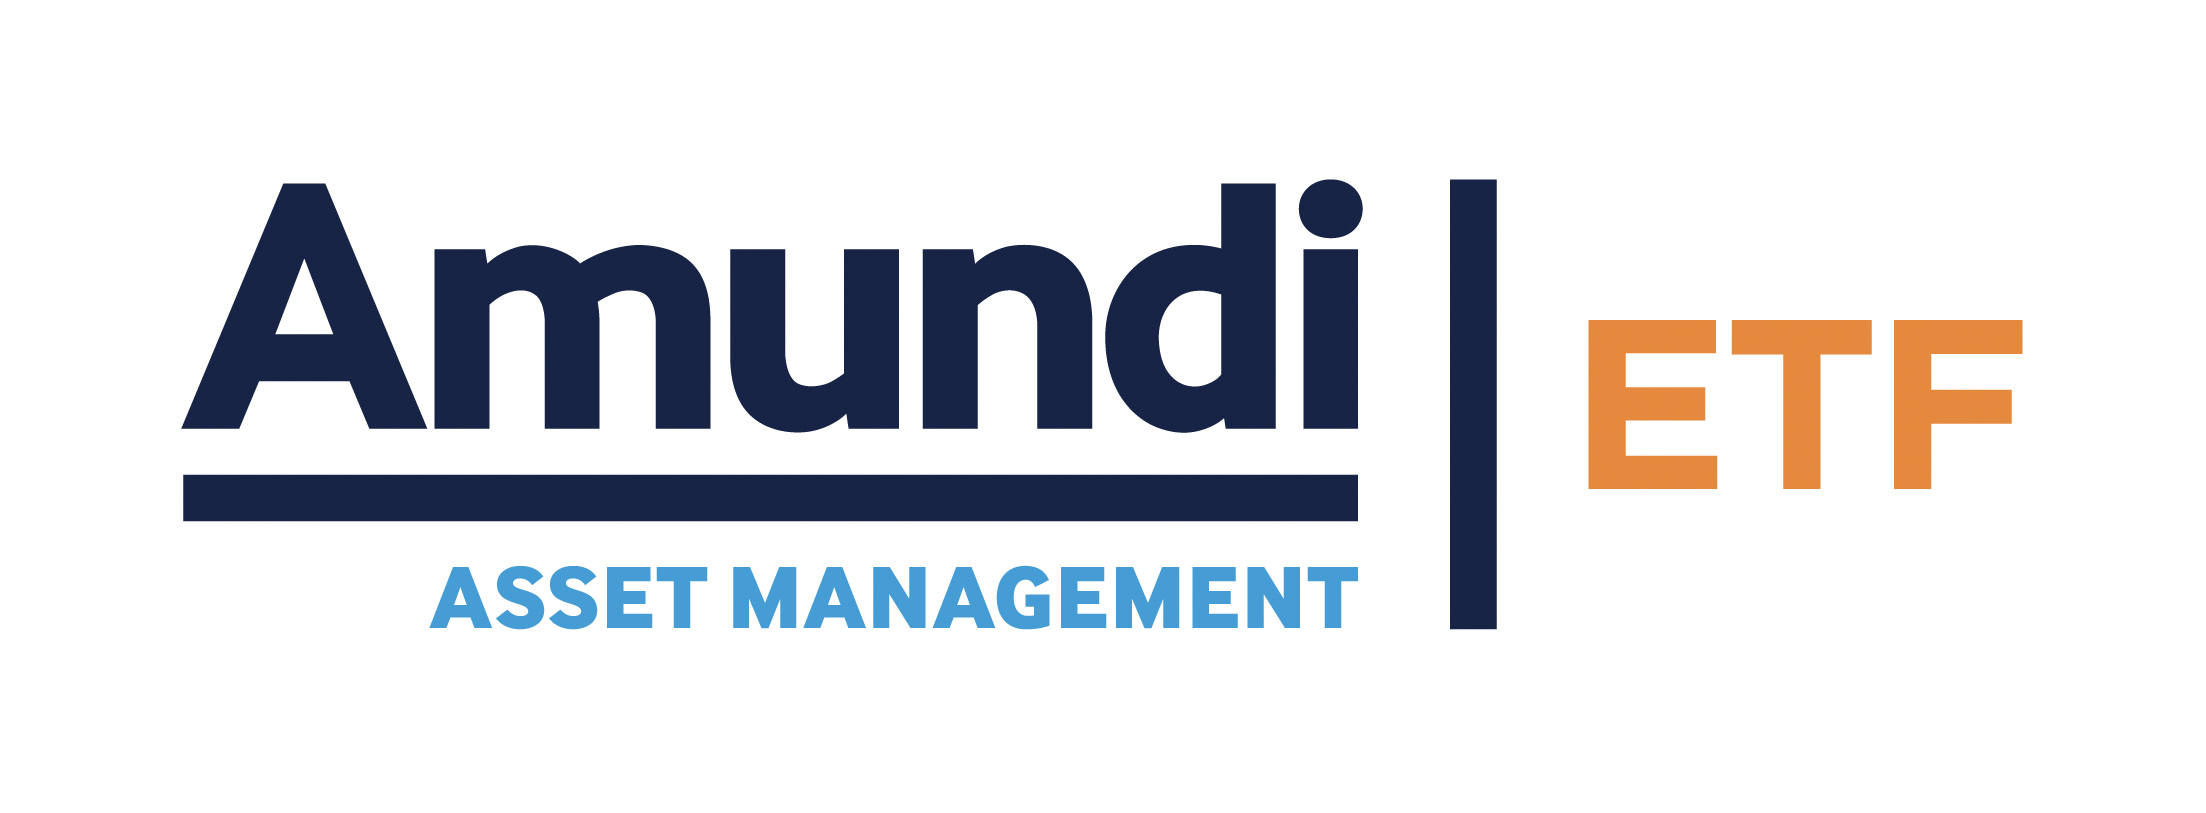 Amundi Logo